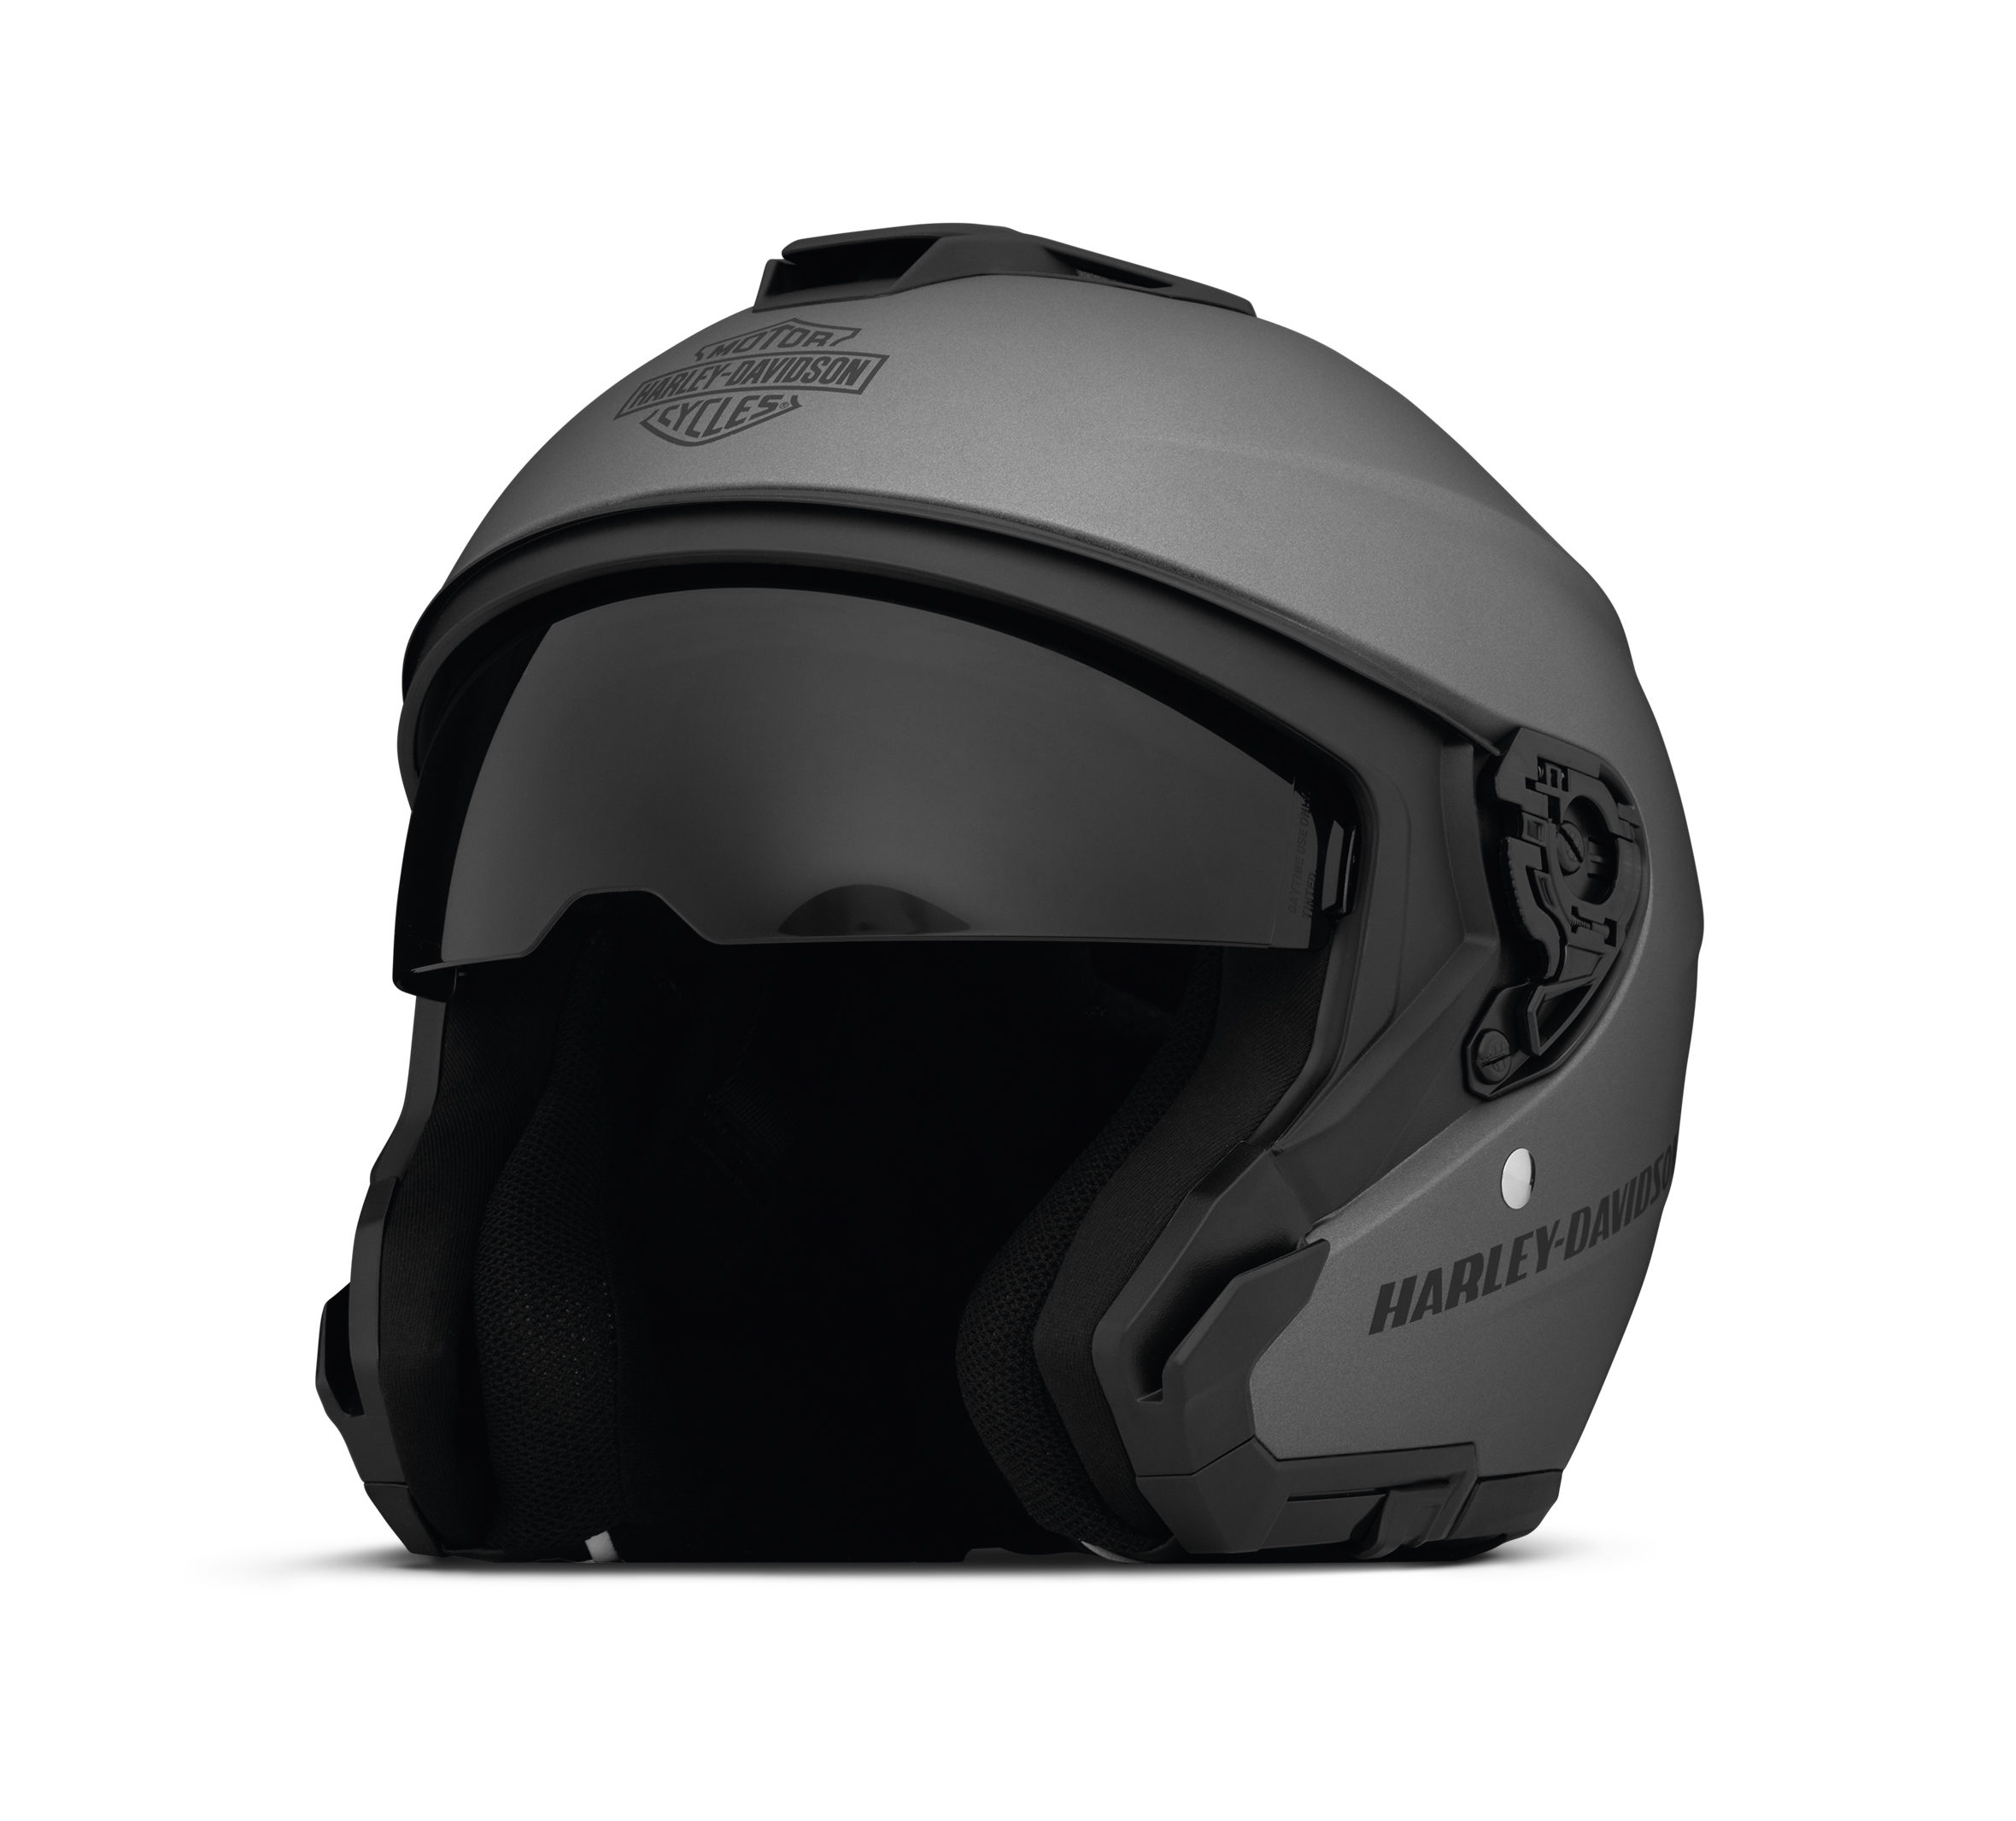 Accessories Hats & Caps Helmets Motorcycle Helmets White stripped BFR DOT Helmet open face 